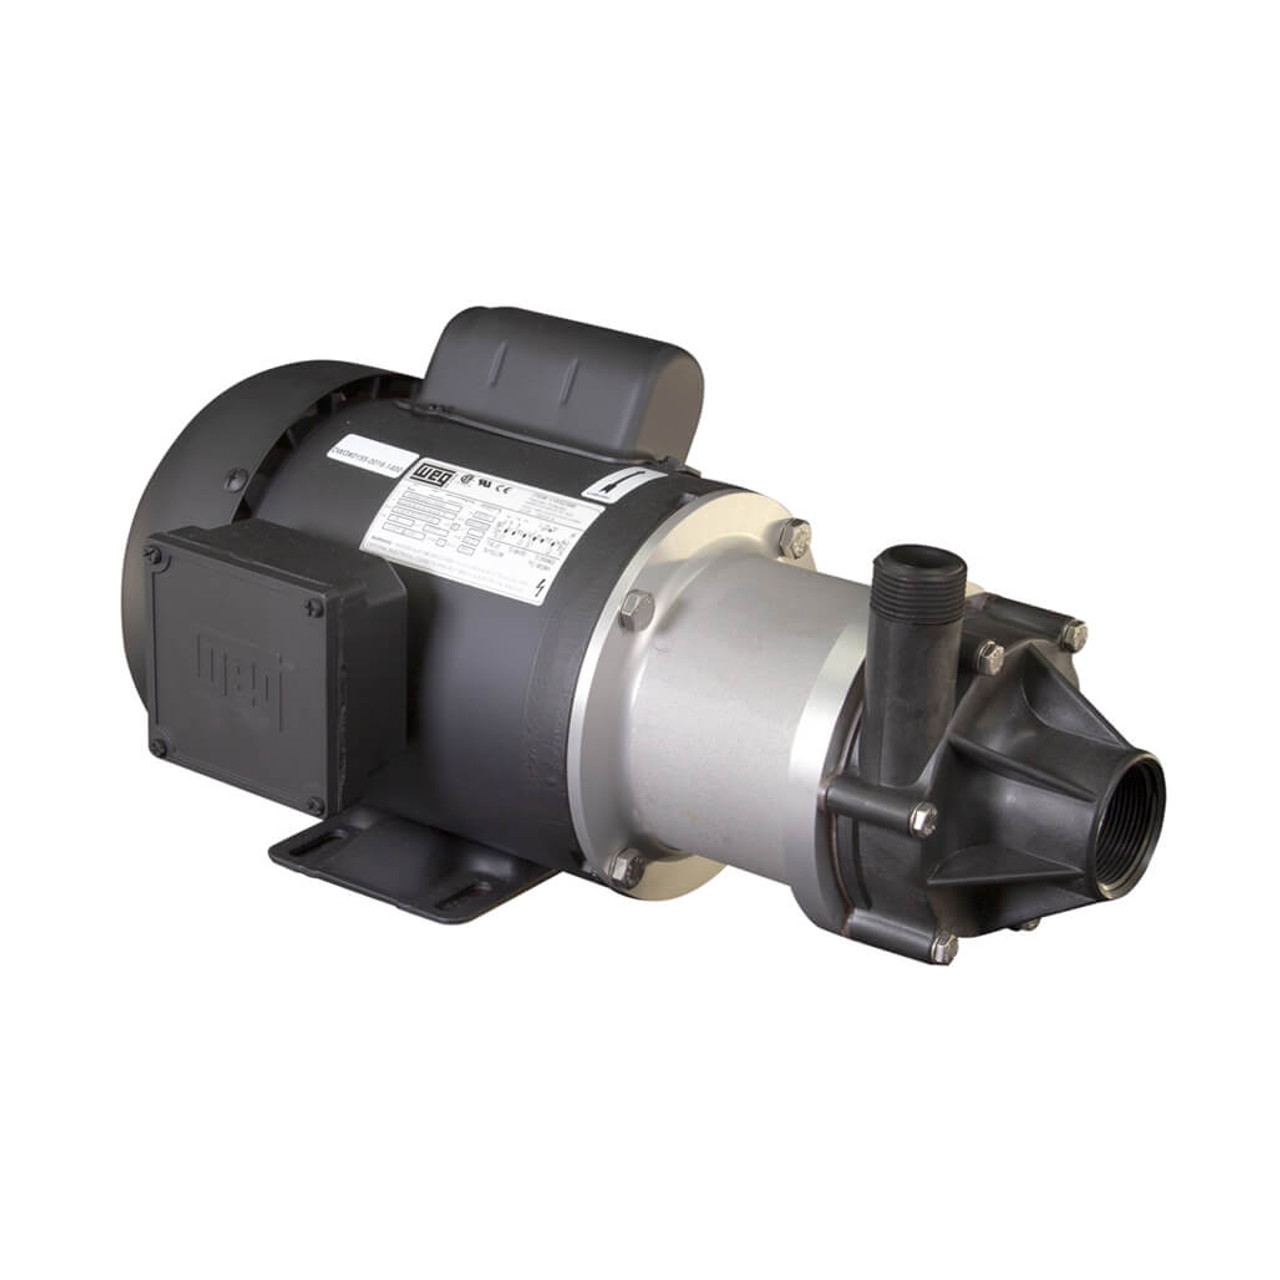 March Pumps - TE-7R-MD 575V 3Ph 1HP PL Bkt, Magnetic Drive Pump - 0155-0348-0100